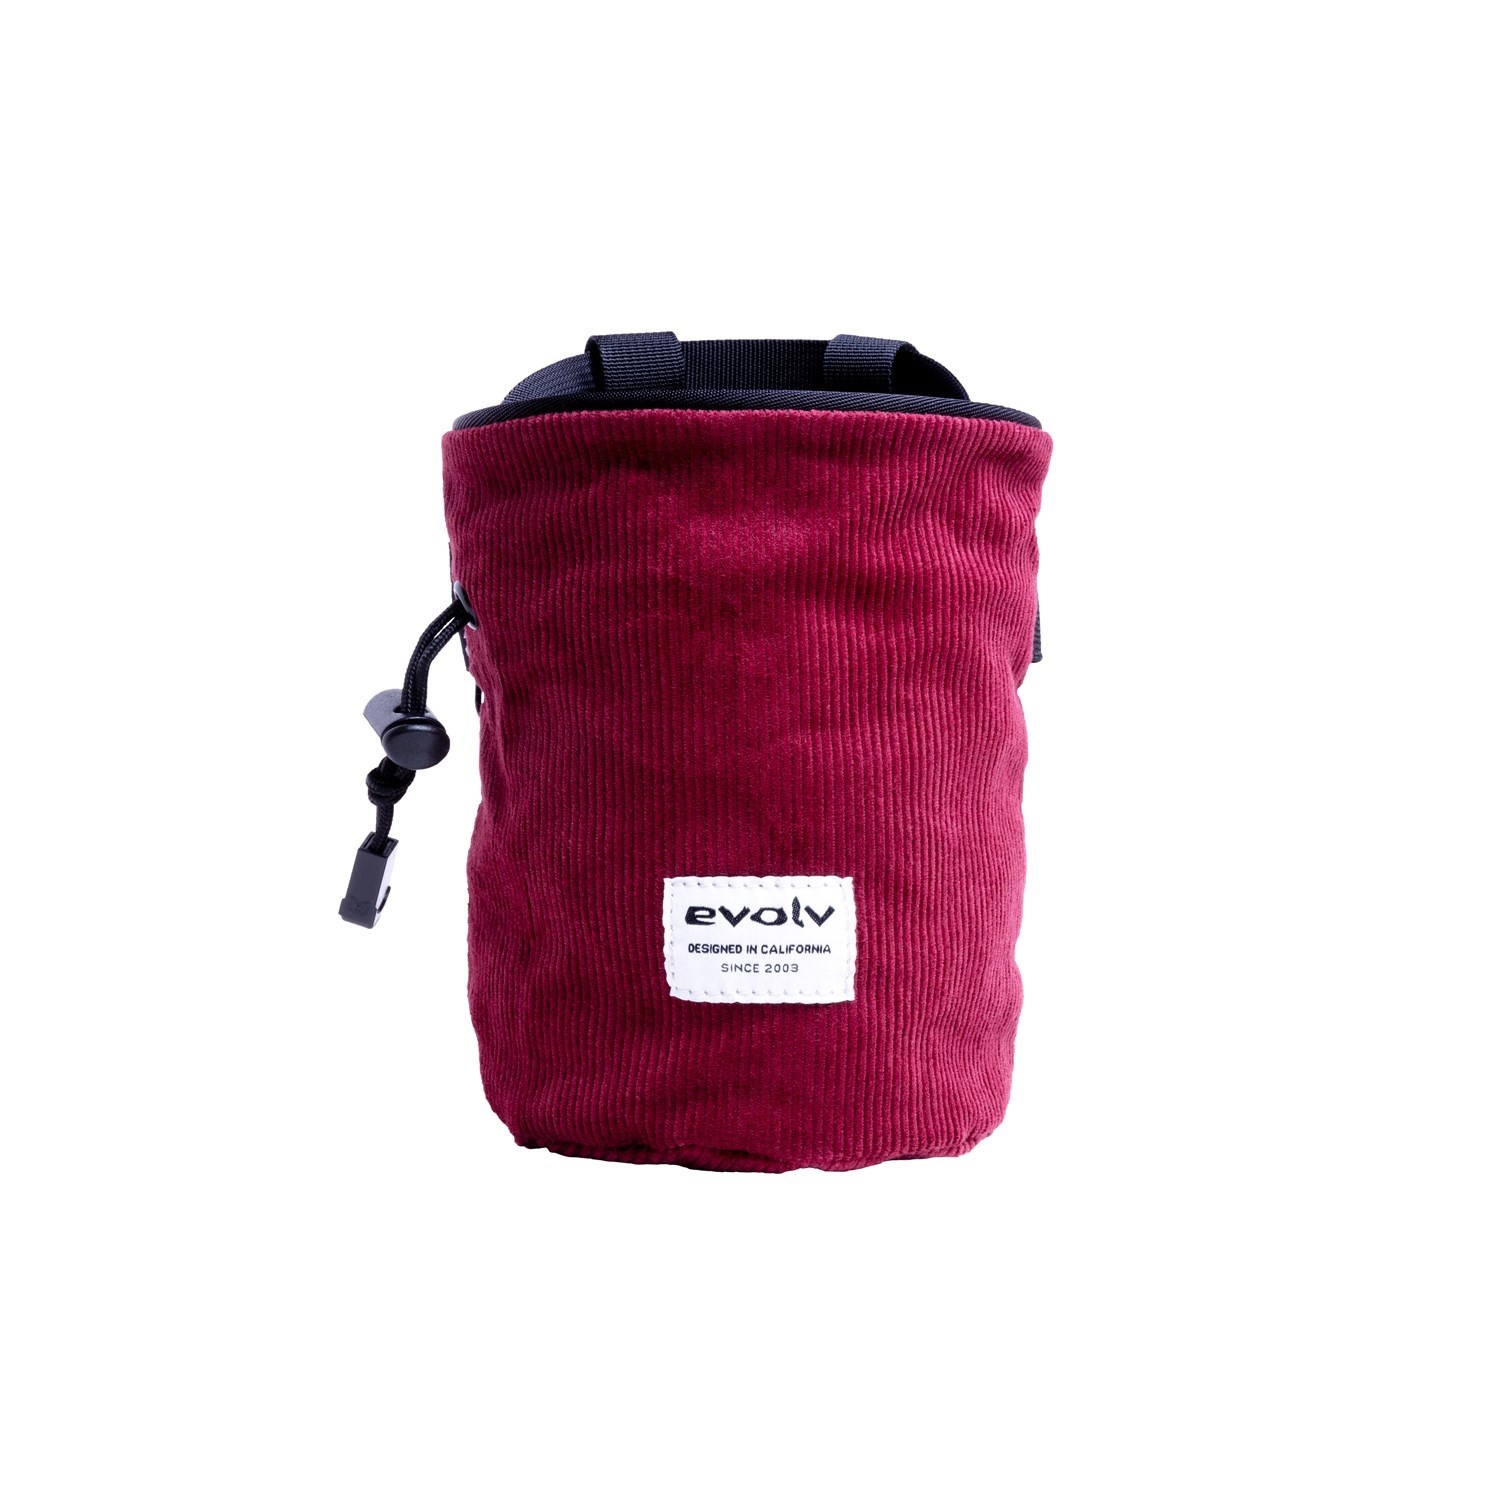 Evolv / Chalk Bag Belt